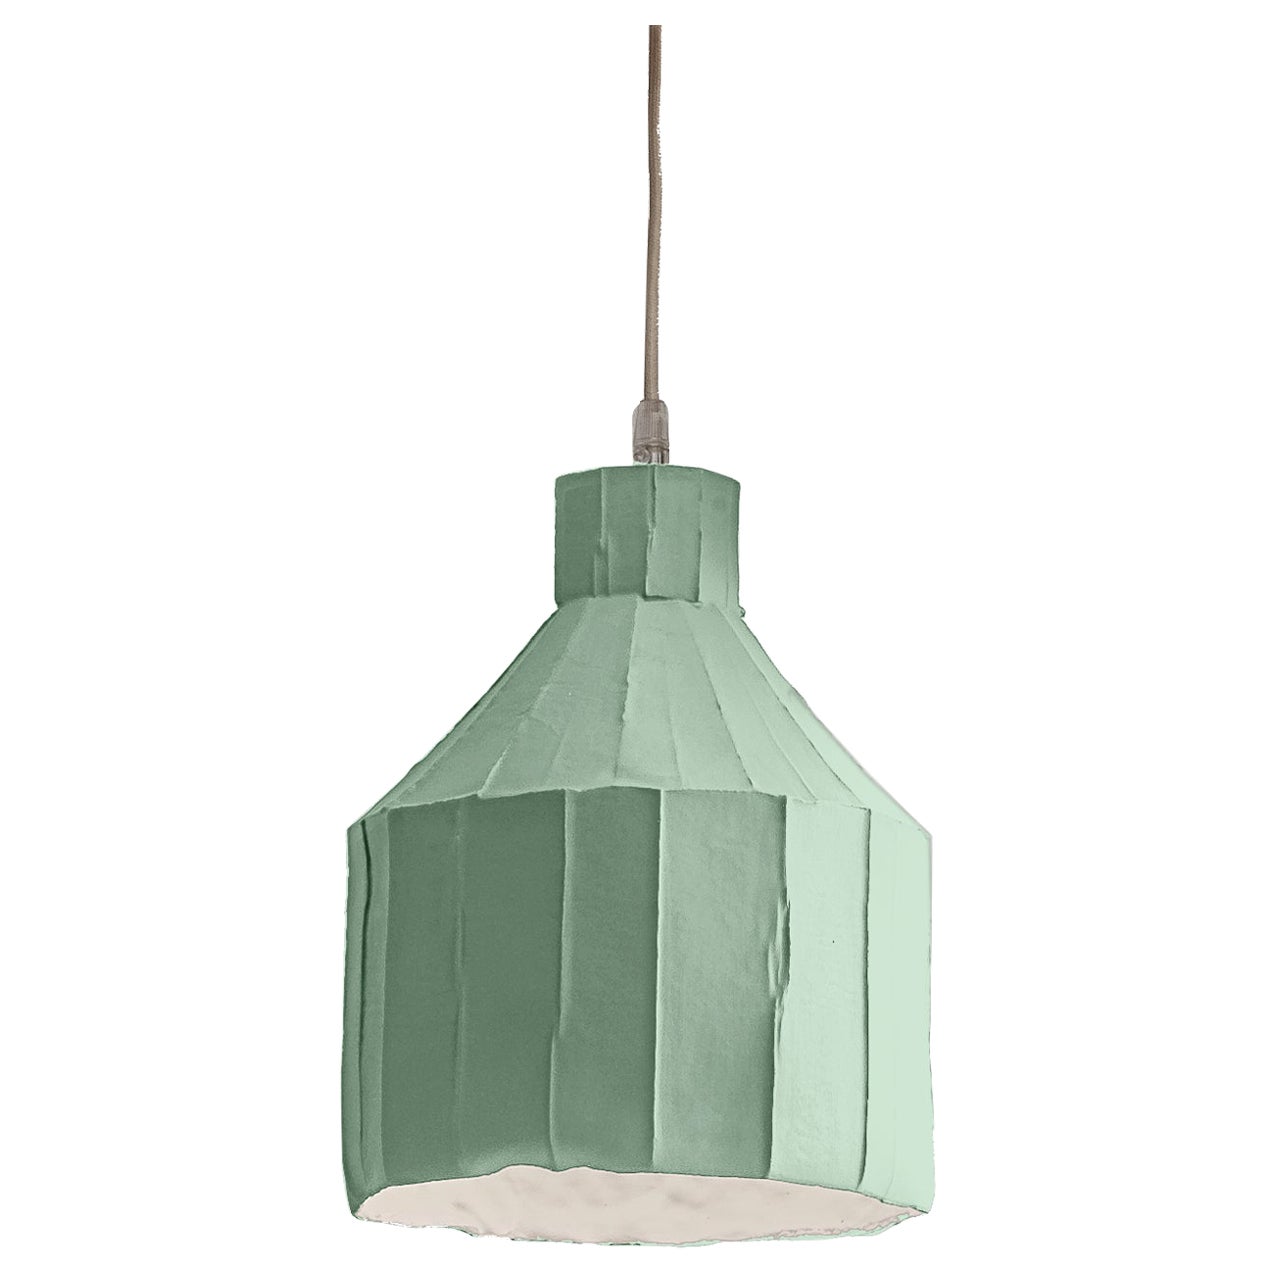 Lampe SUFI contemporaine en céramique verte texturée Corteccia en vente